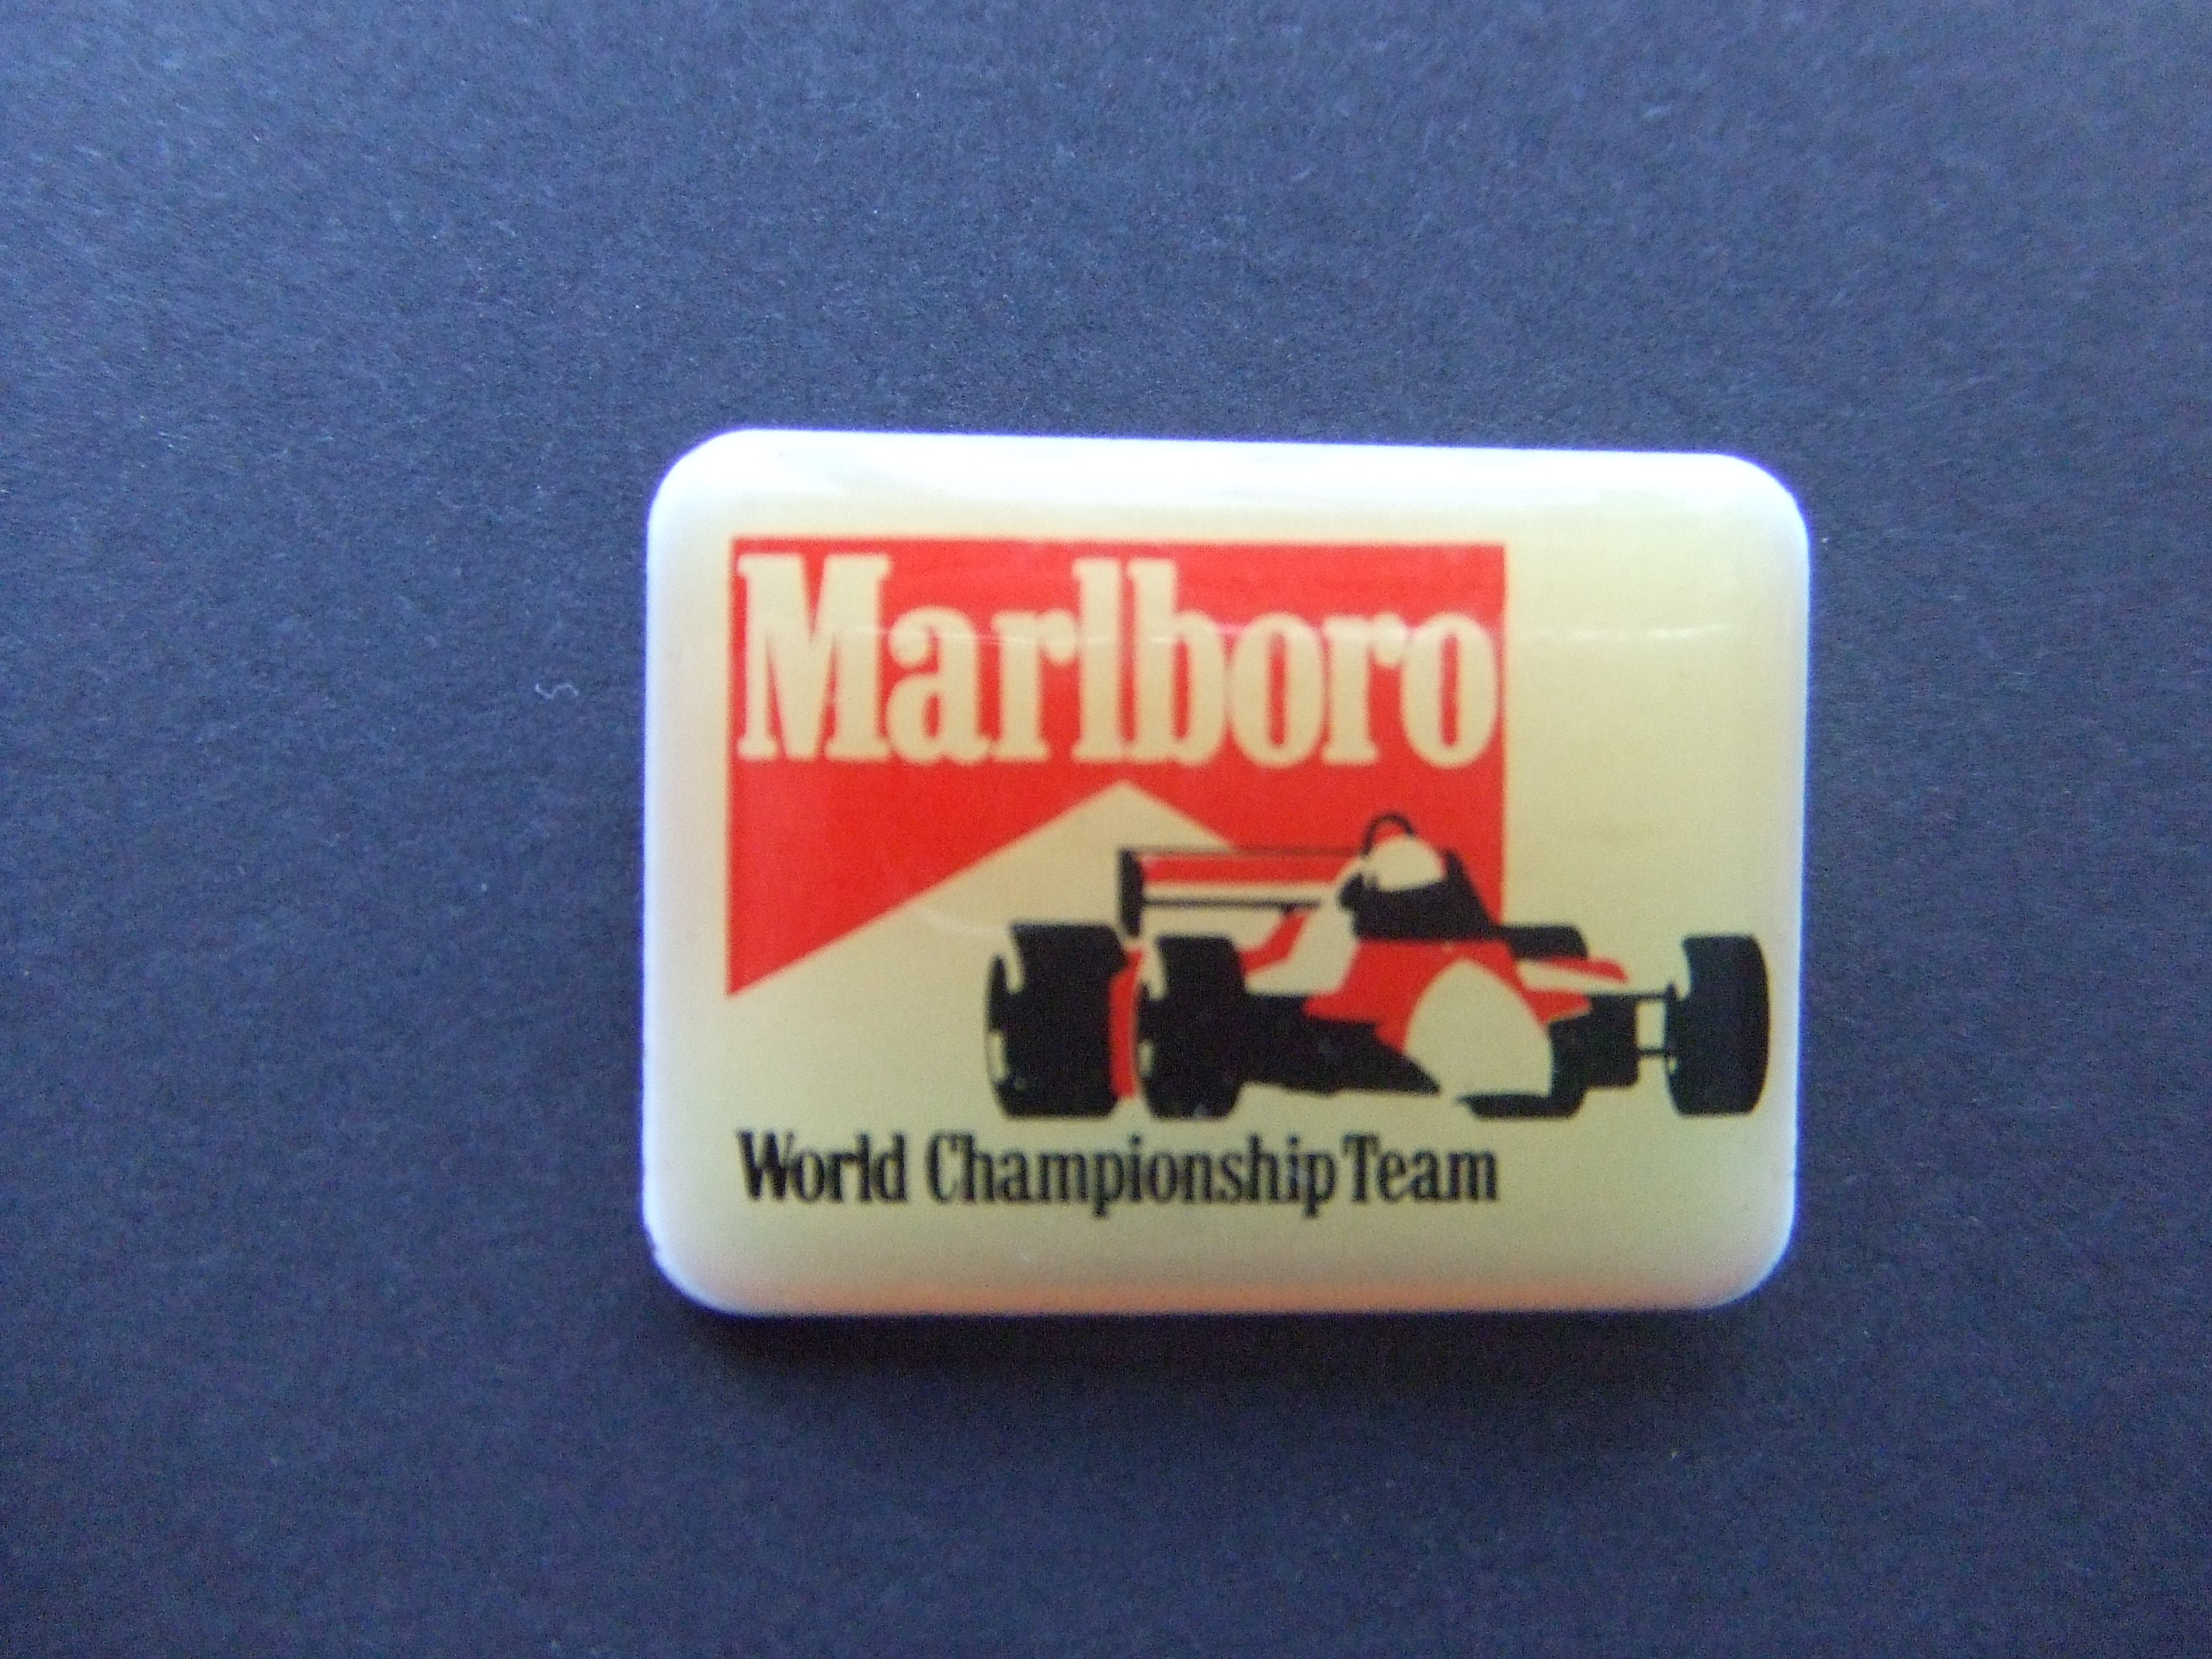 Marlboro World Championsteam Formule F1